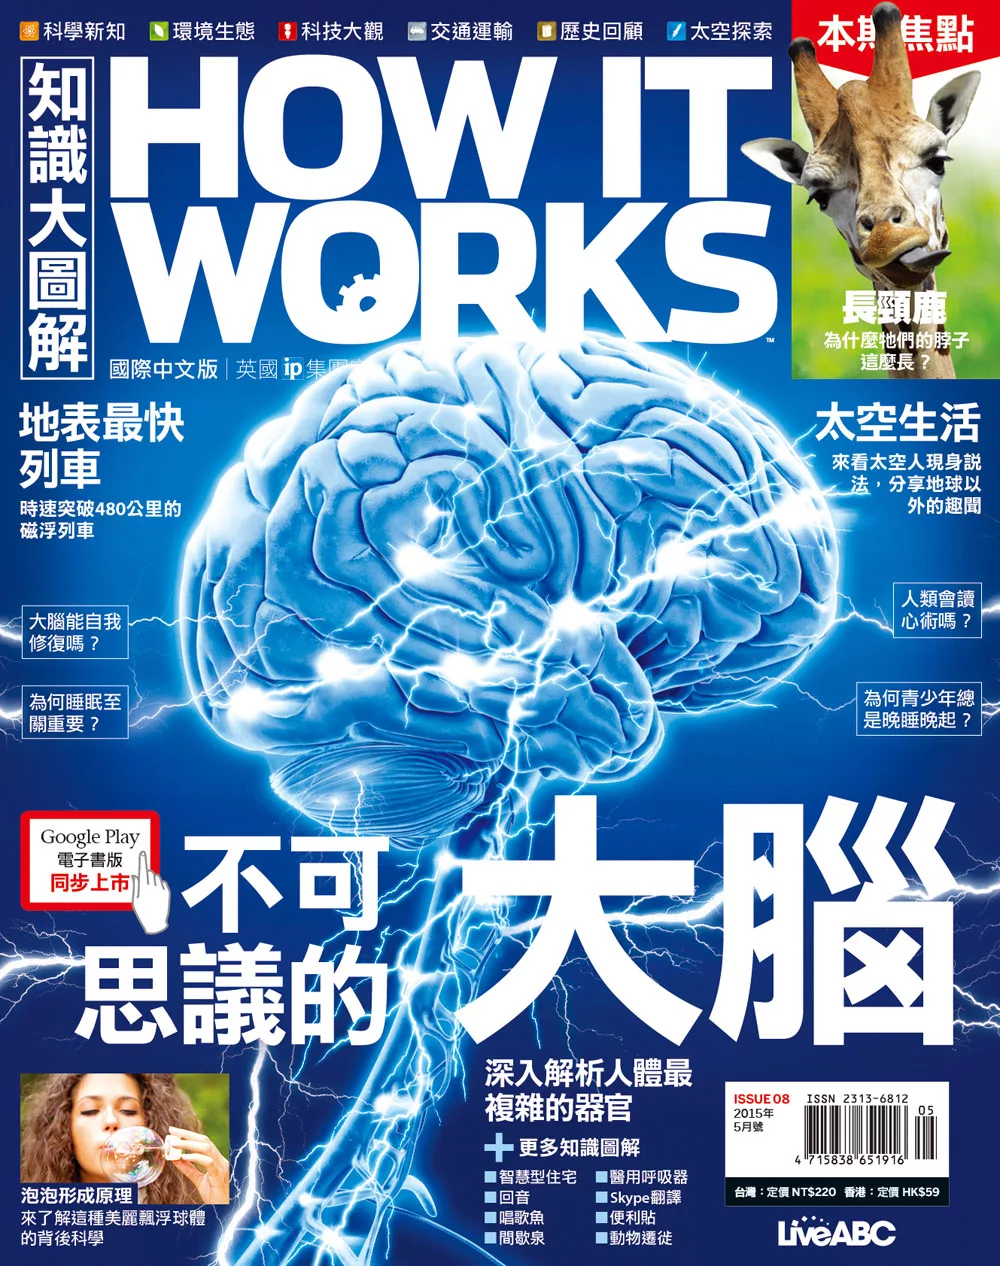 How it works知識大圖解 國際中文版 5月號/2015第8期 (電子雜誌)